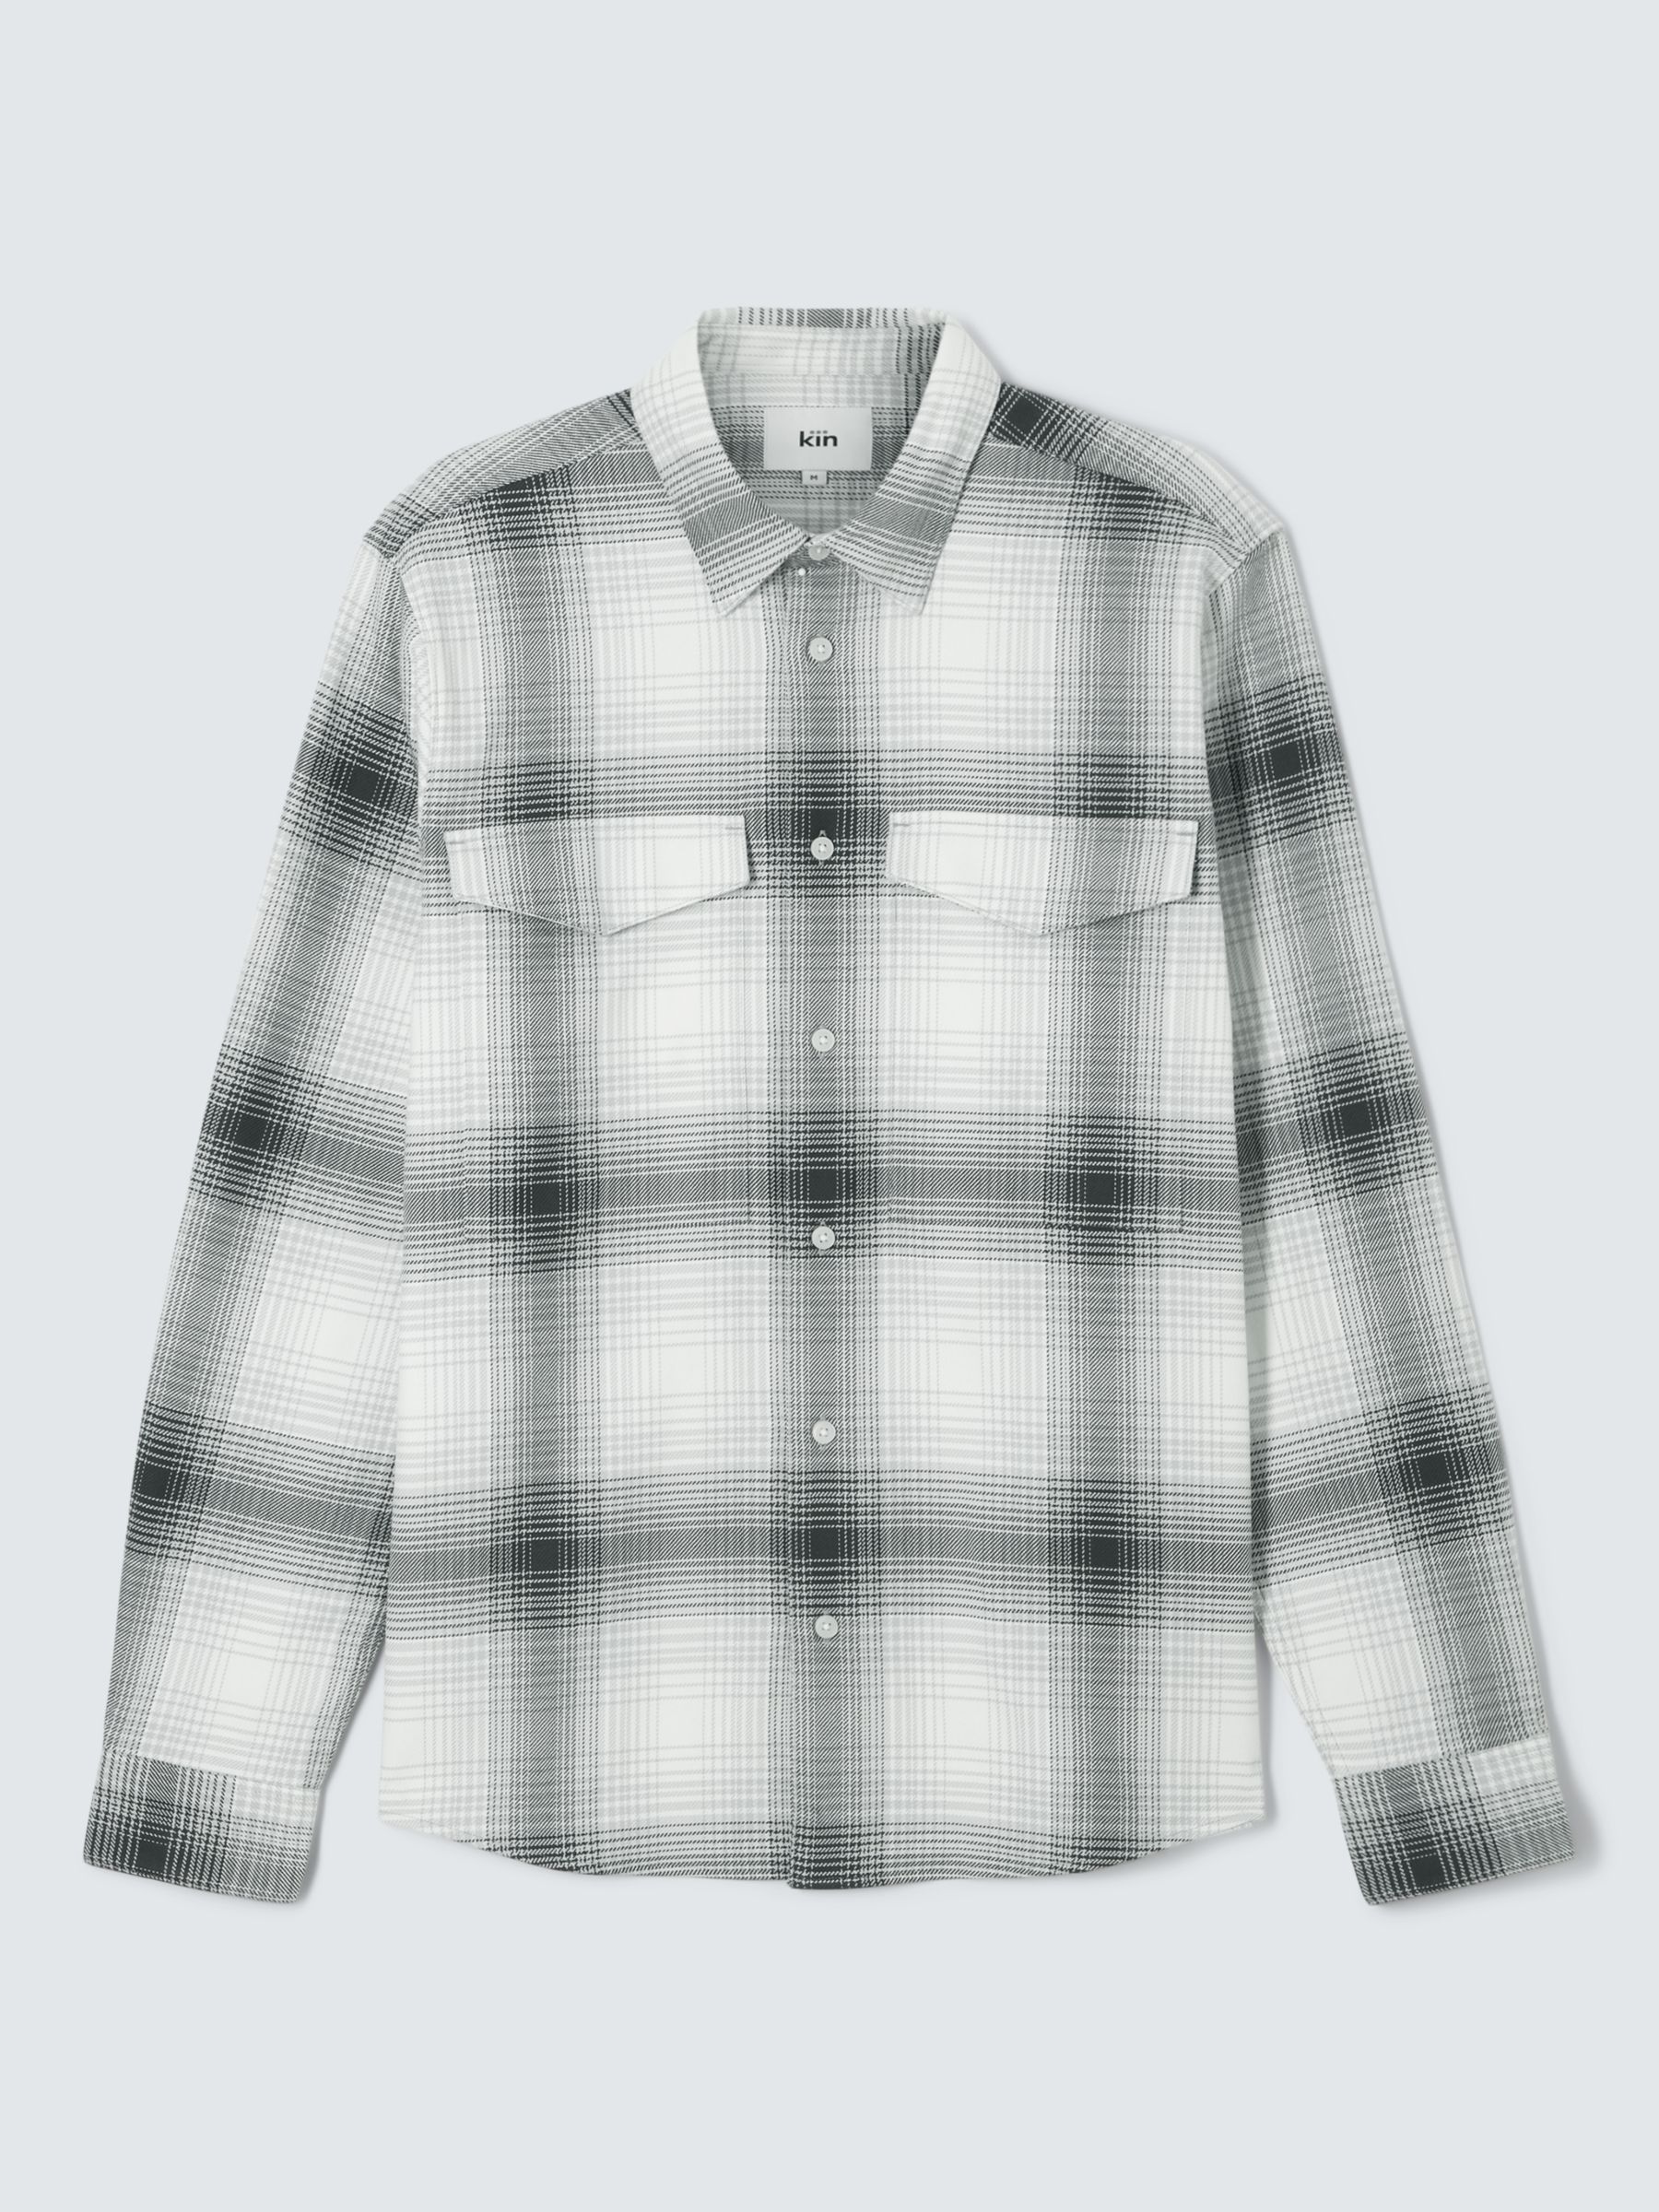 Kin Cotton Check Pocket Overshirt, Ecru, S